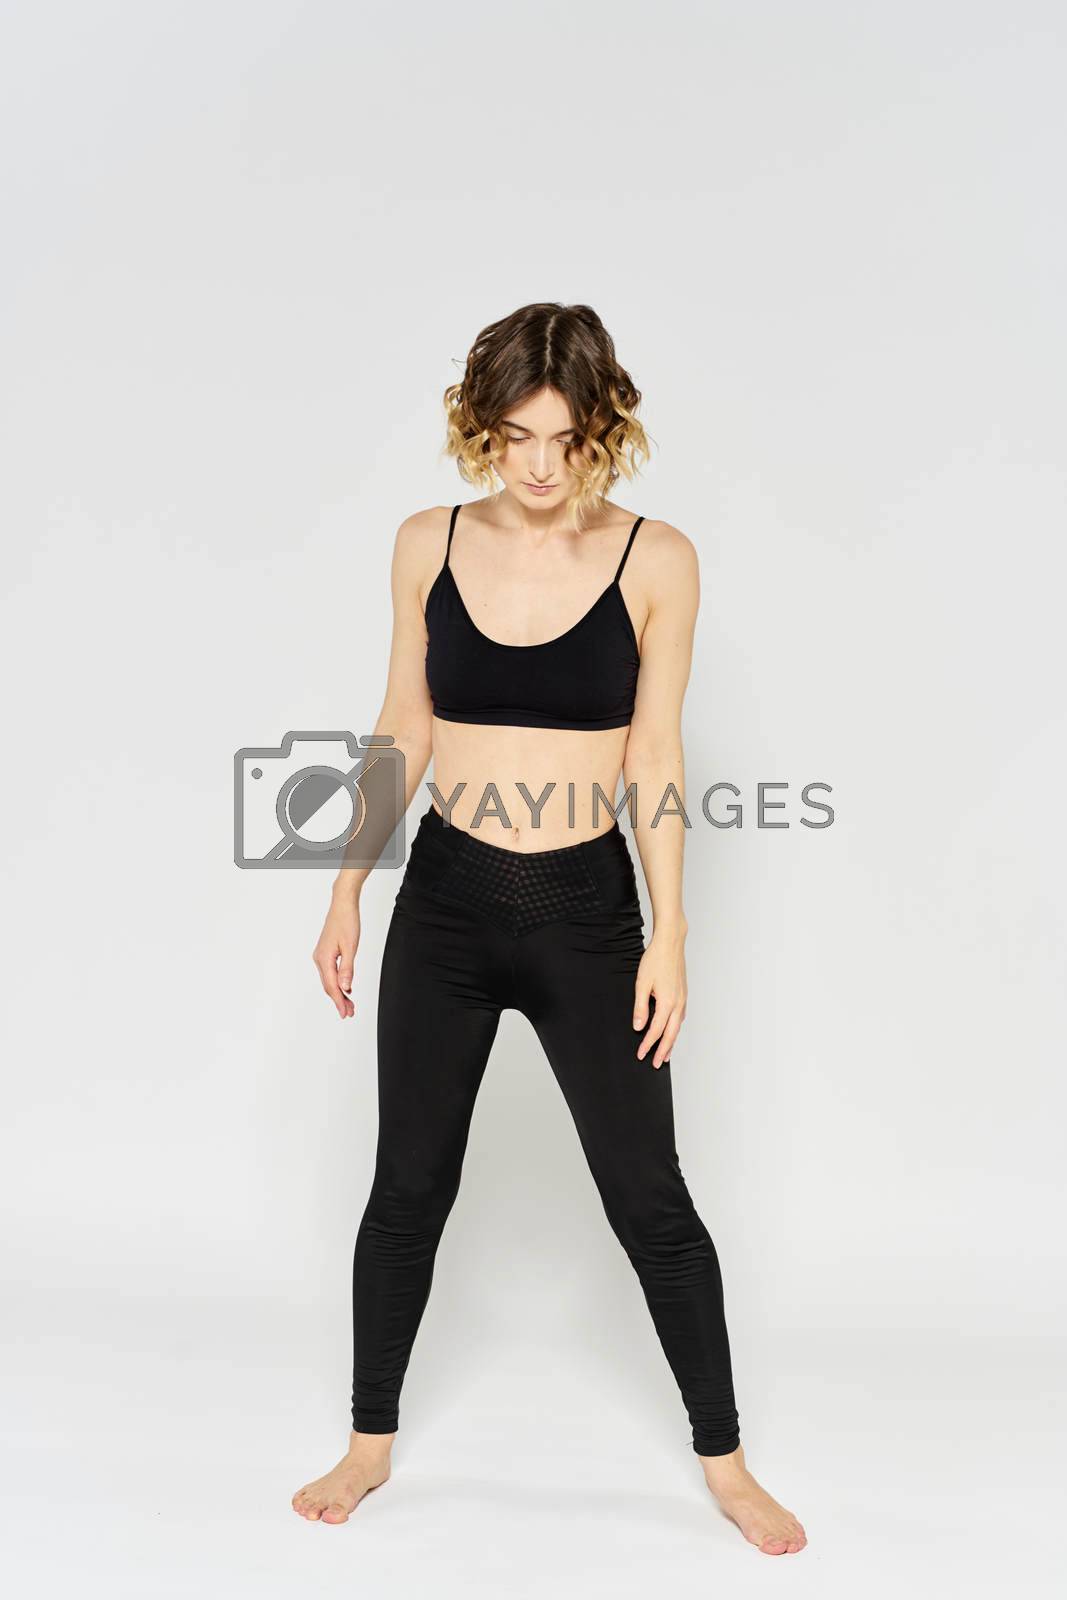 Yoga asana sport woman fitness light background leggings model. High quality photo